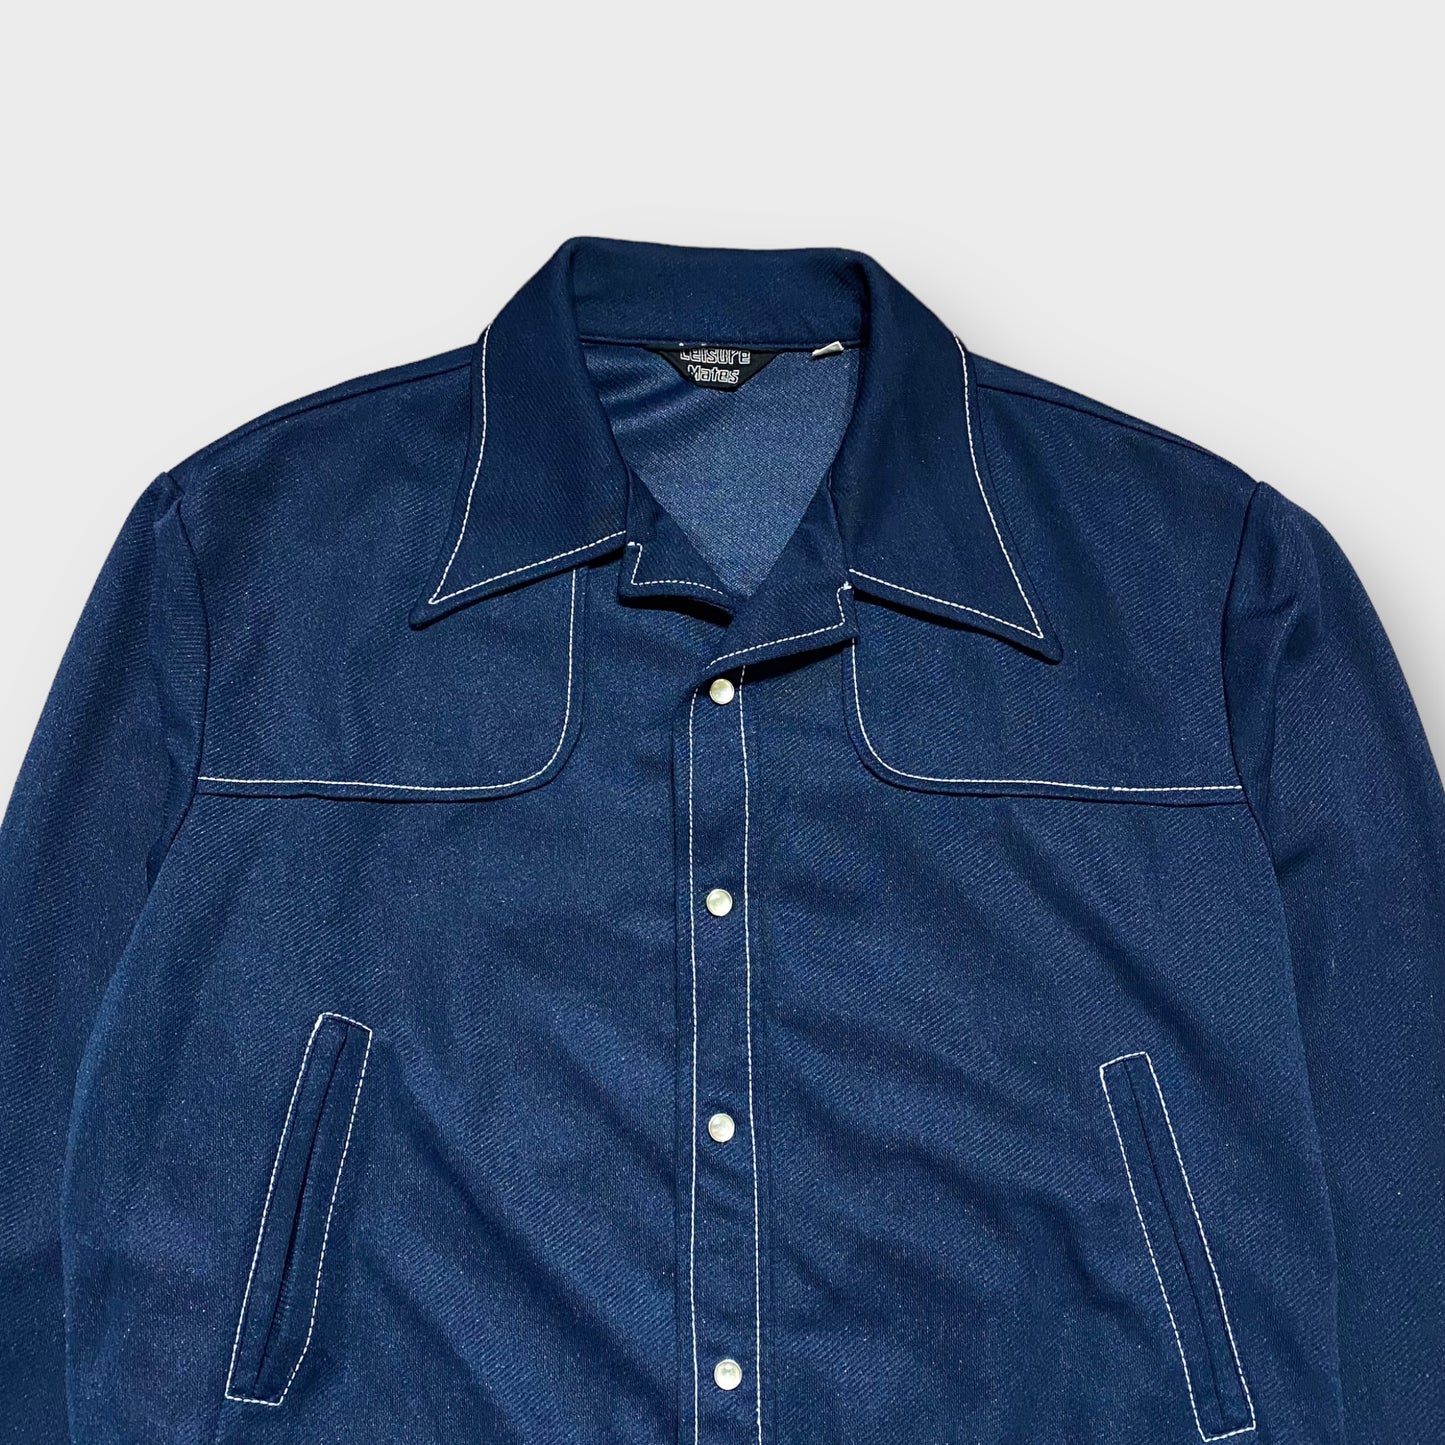 70's "Leisure Mates" Open collar stitch shirt jacket